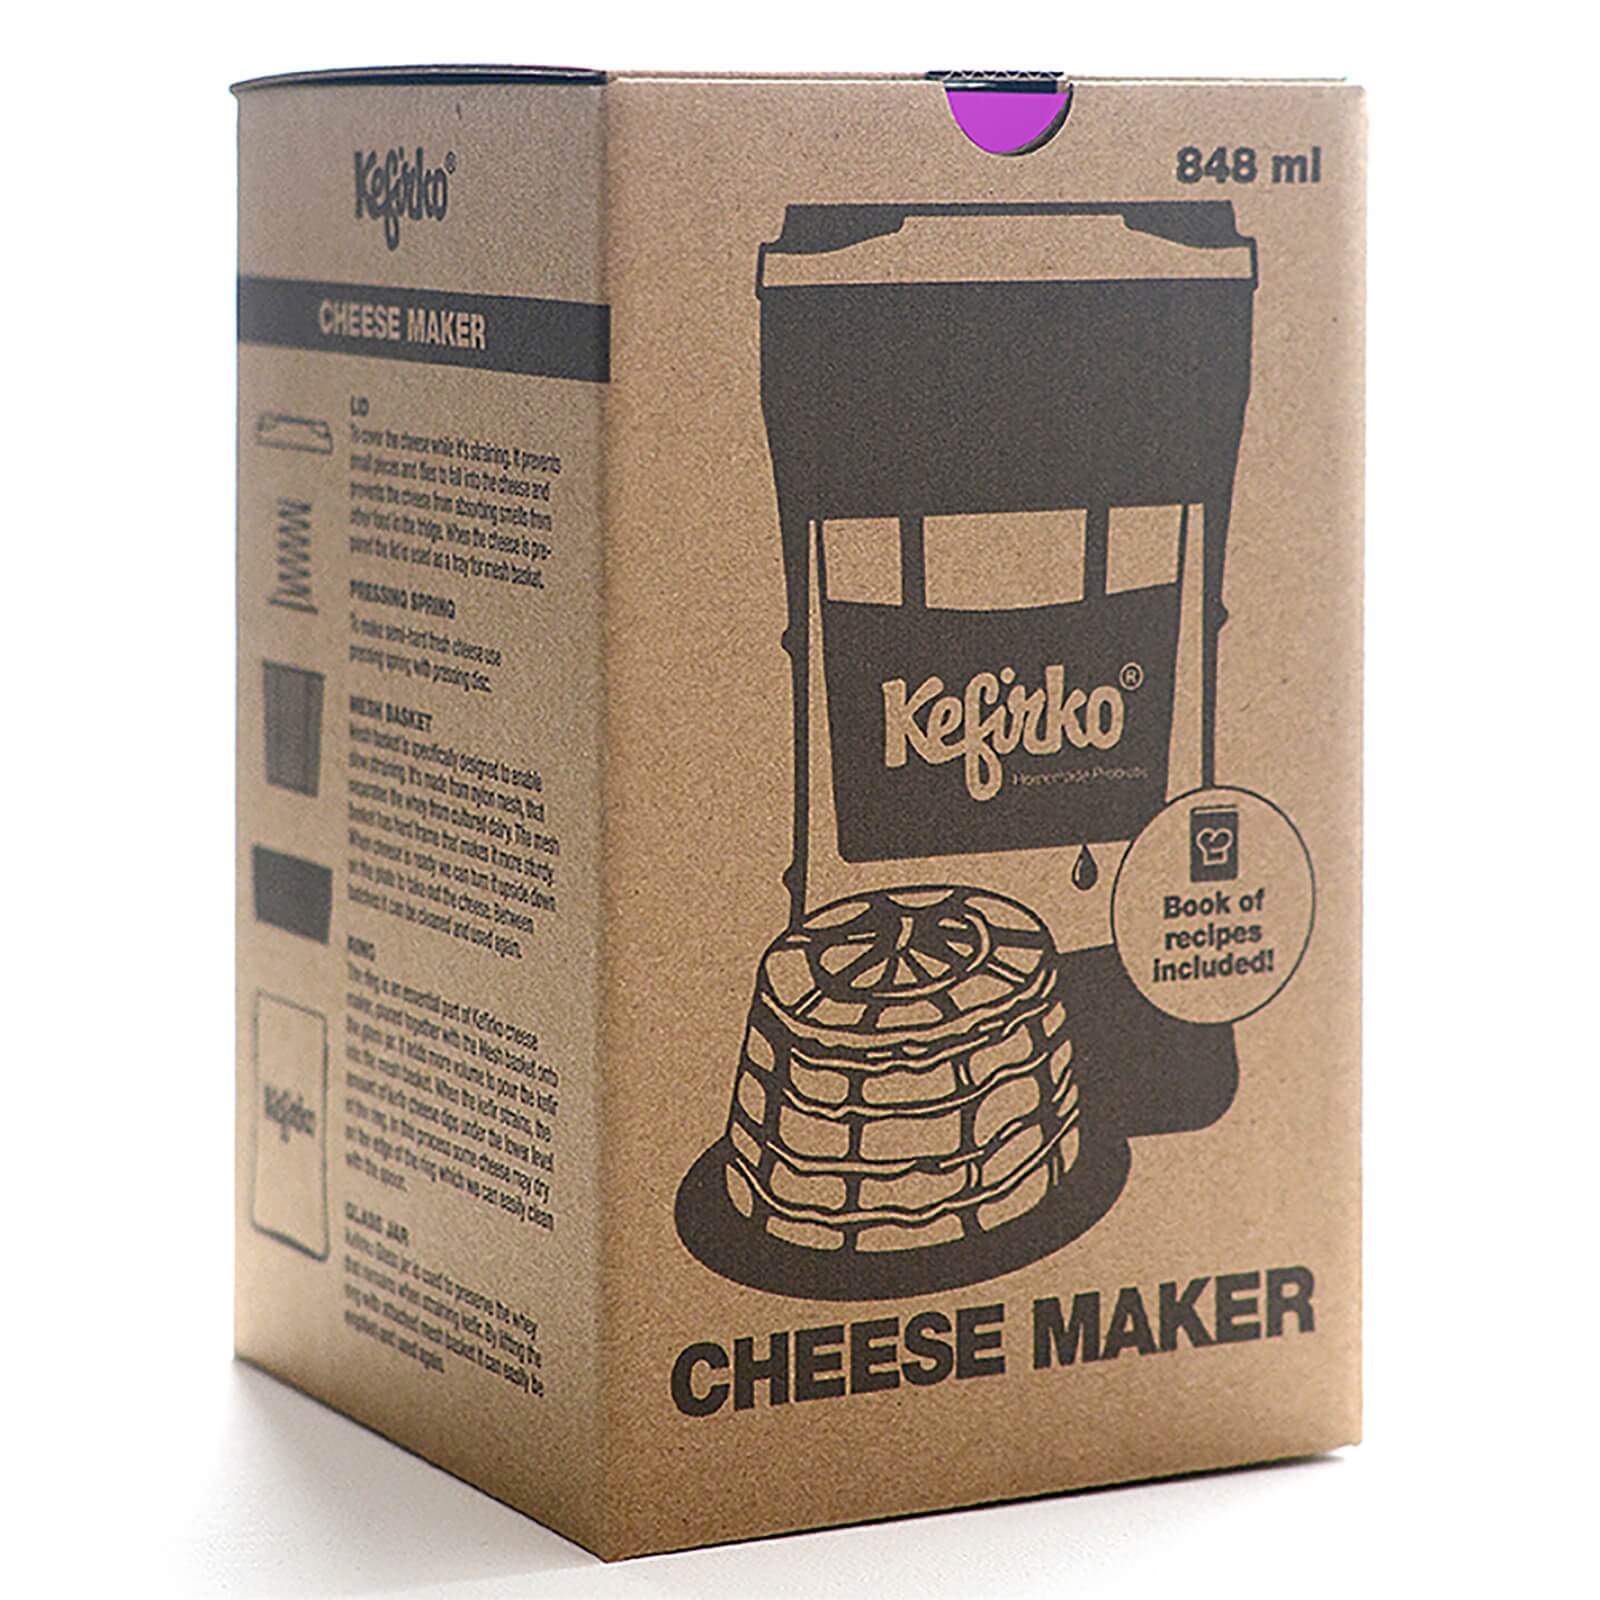 Kefirko Cheese Maker - Grassy Green - 848ml